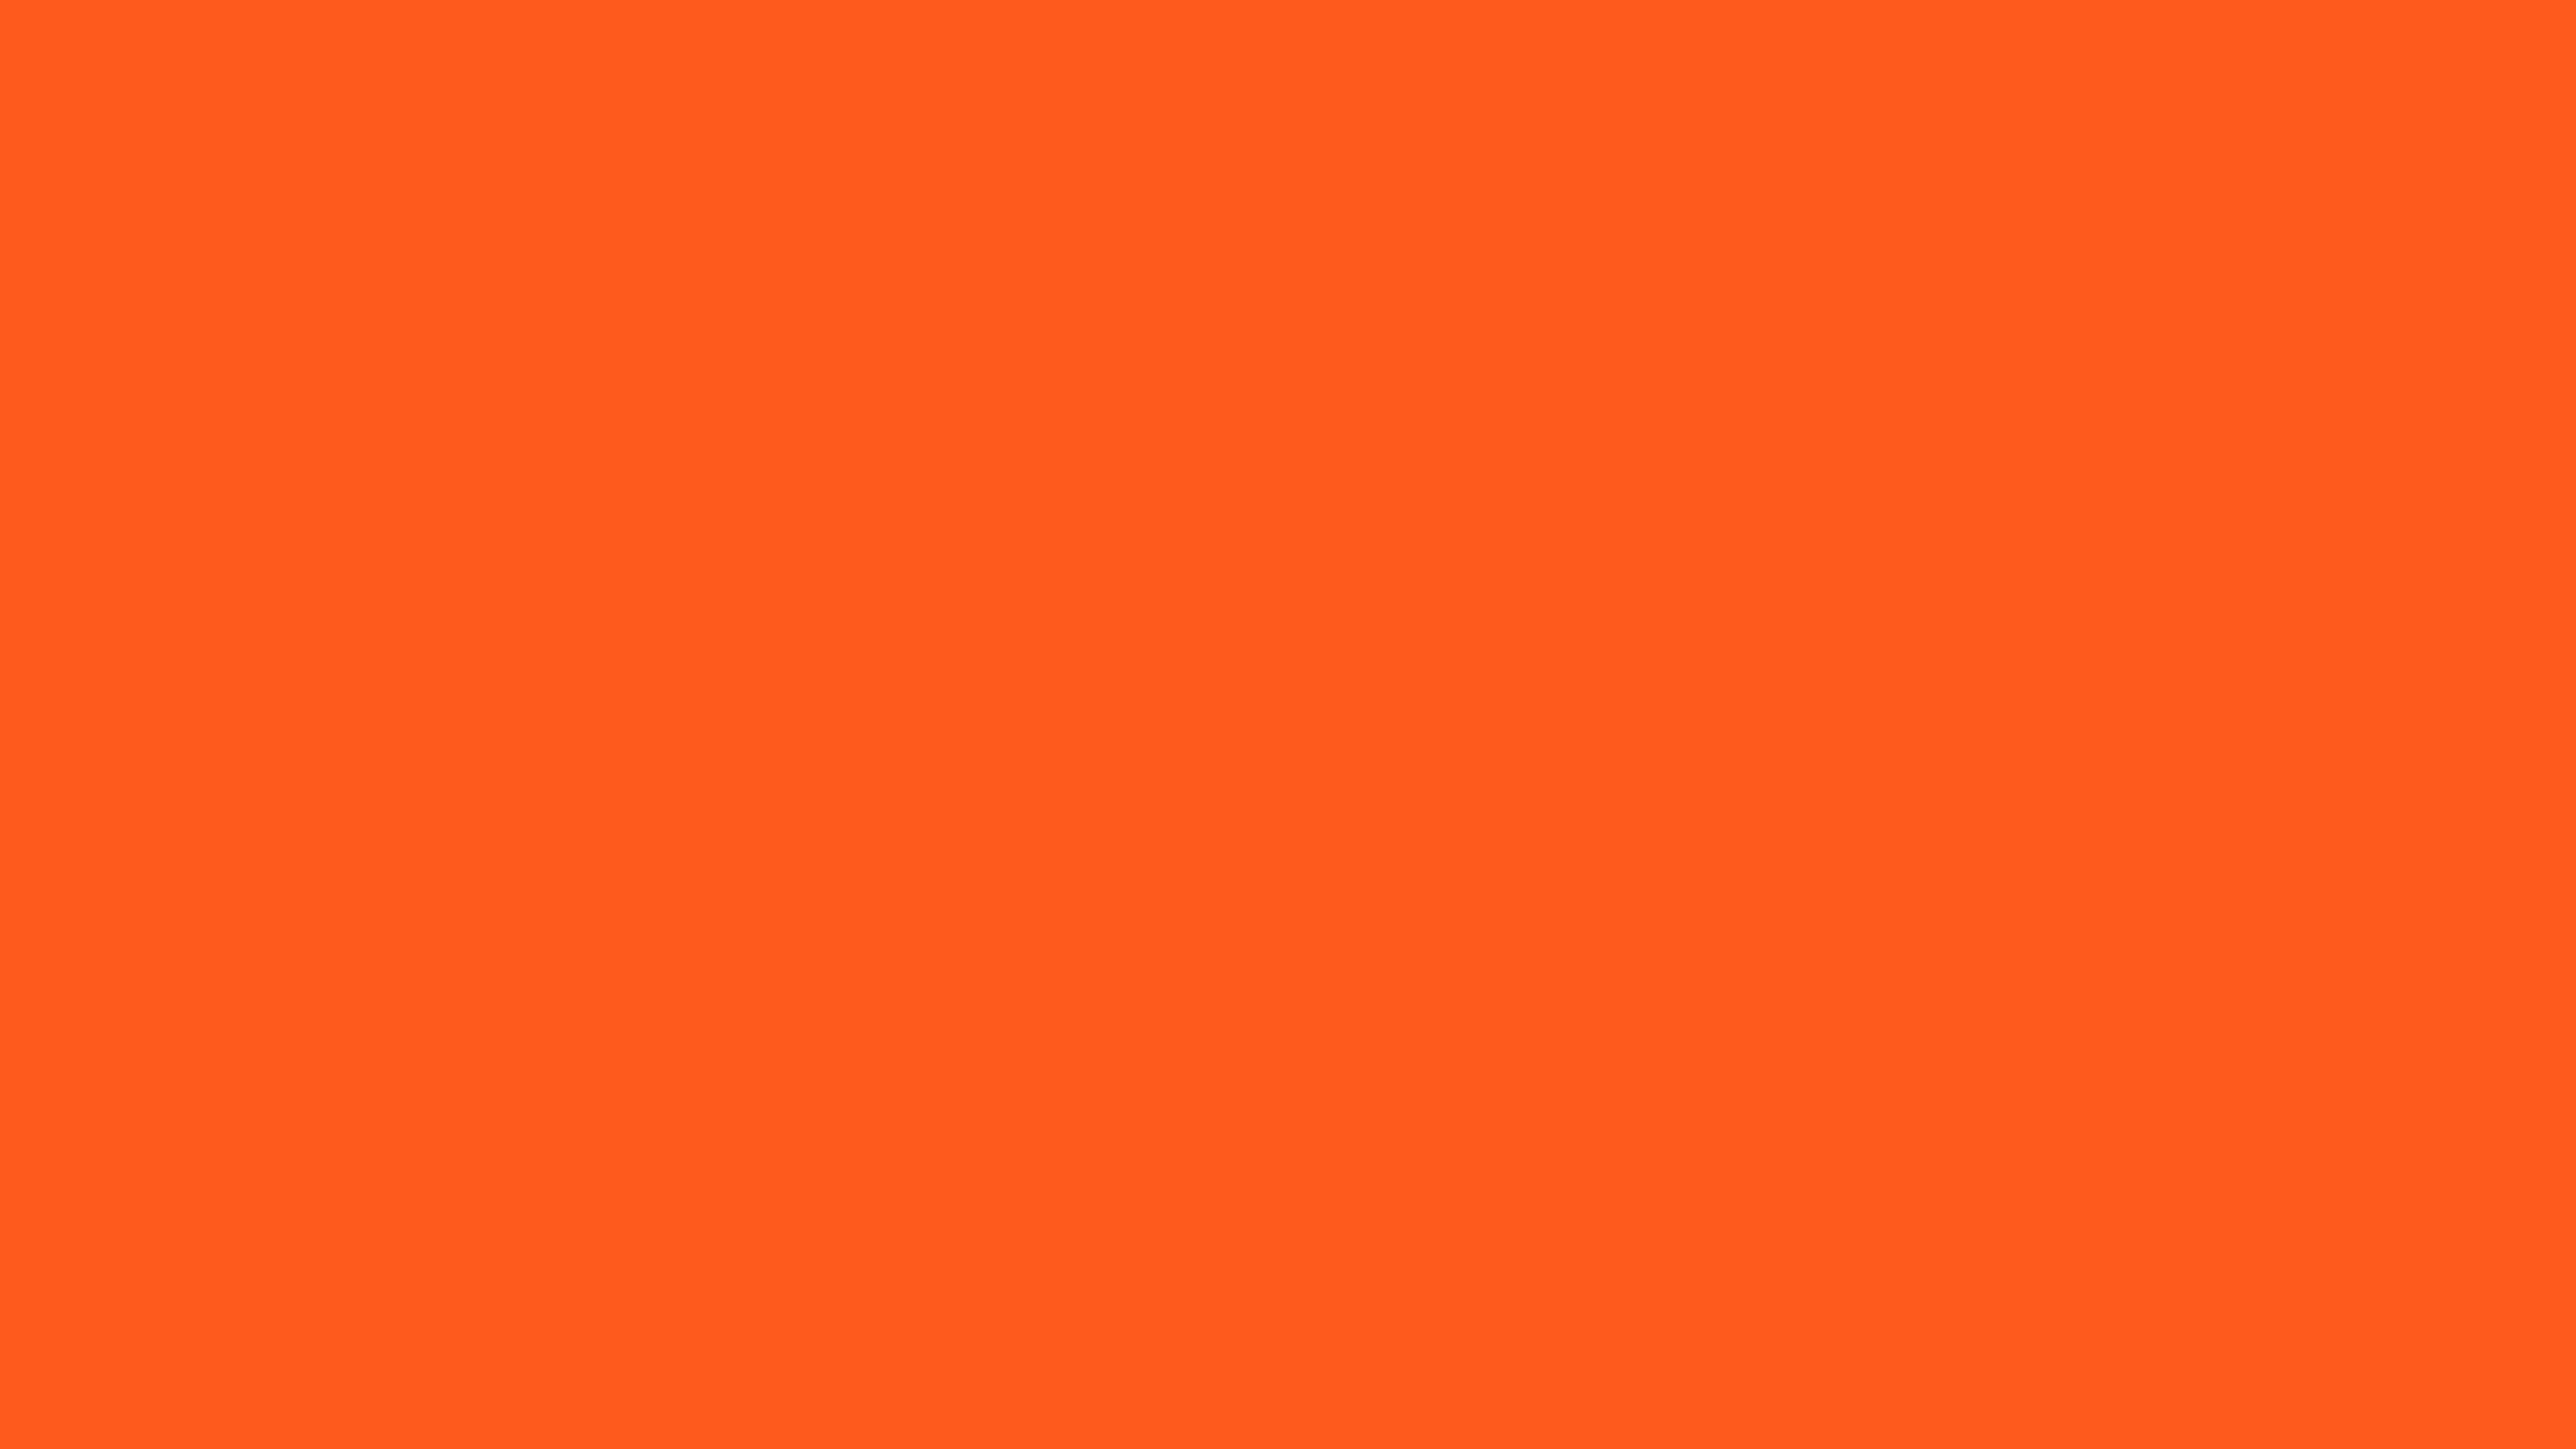 3840x2160 Giants Orange Solid Color Background